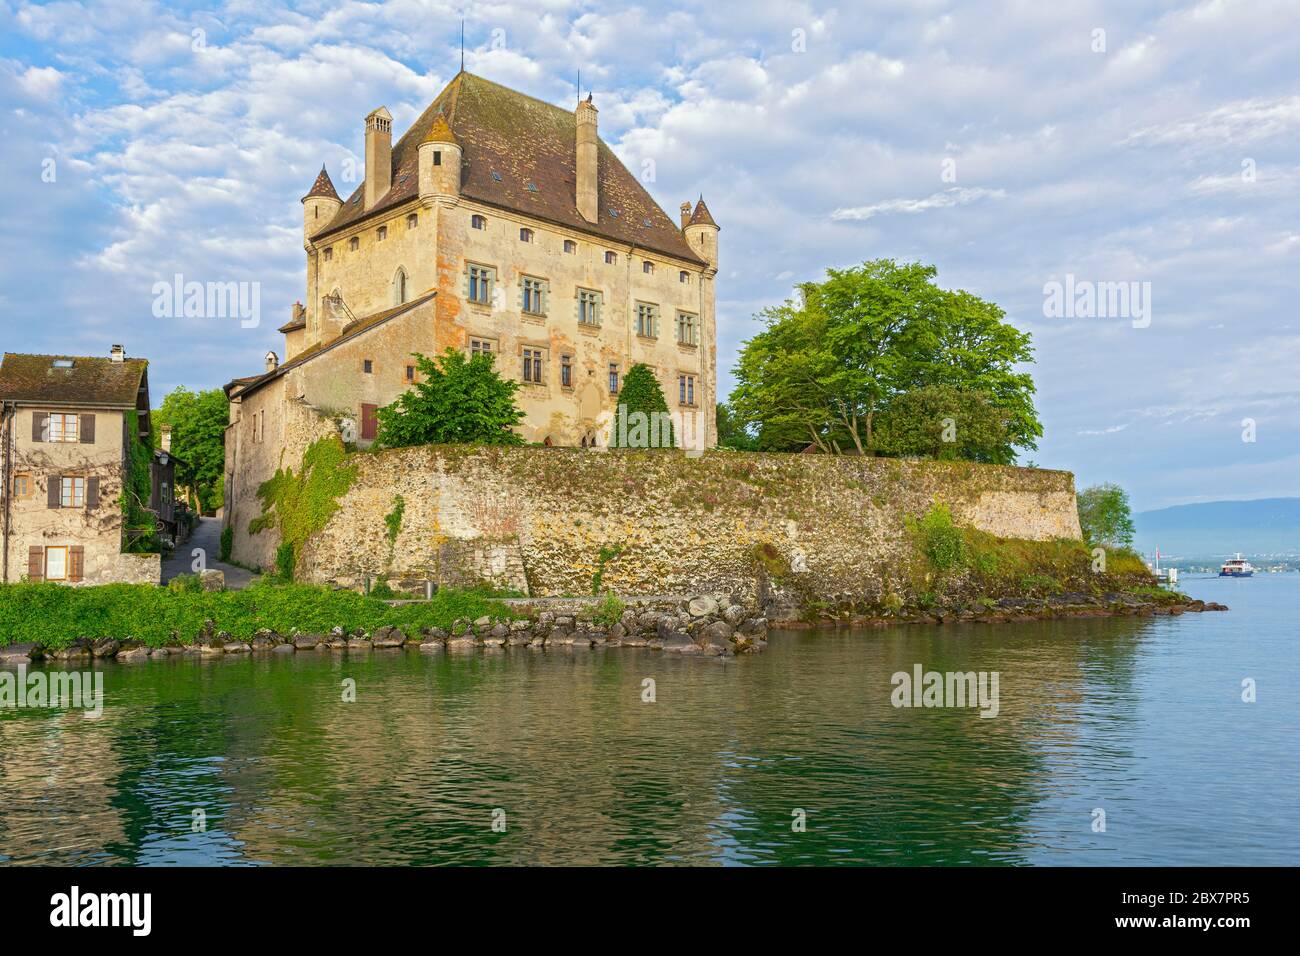 France, Yvoire, Port des Pecheurs, Chateau (castle) 14C, early morning Stock Photo